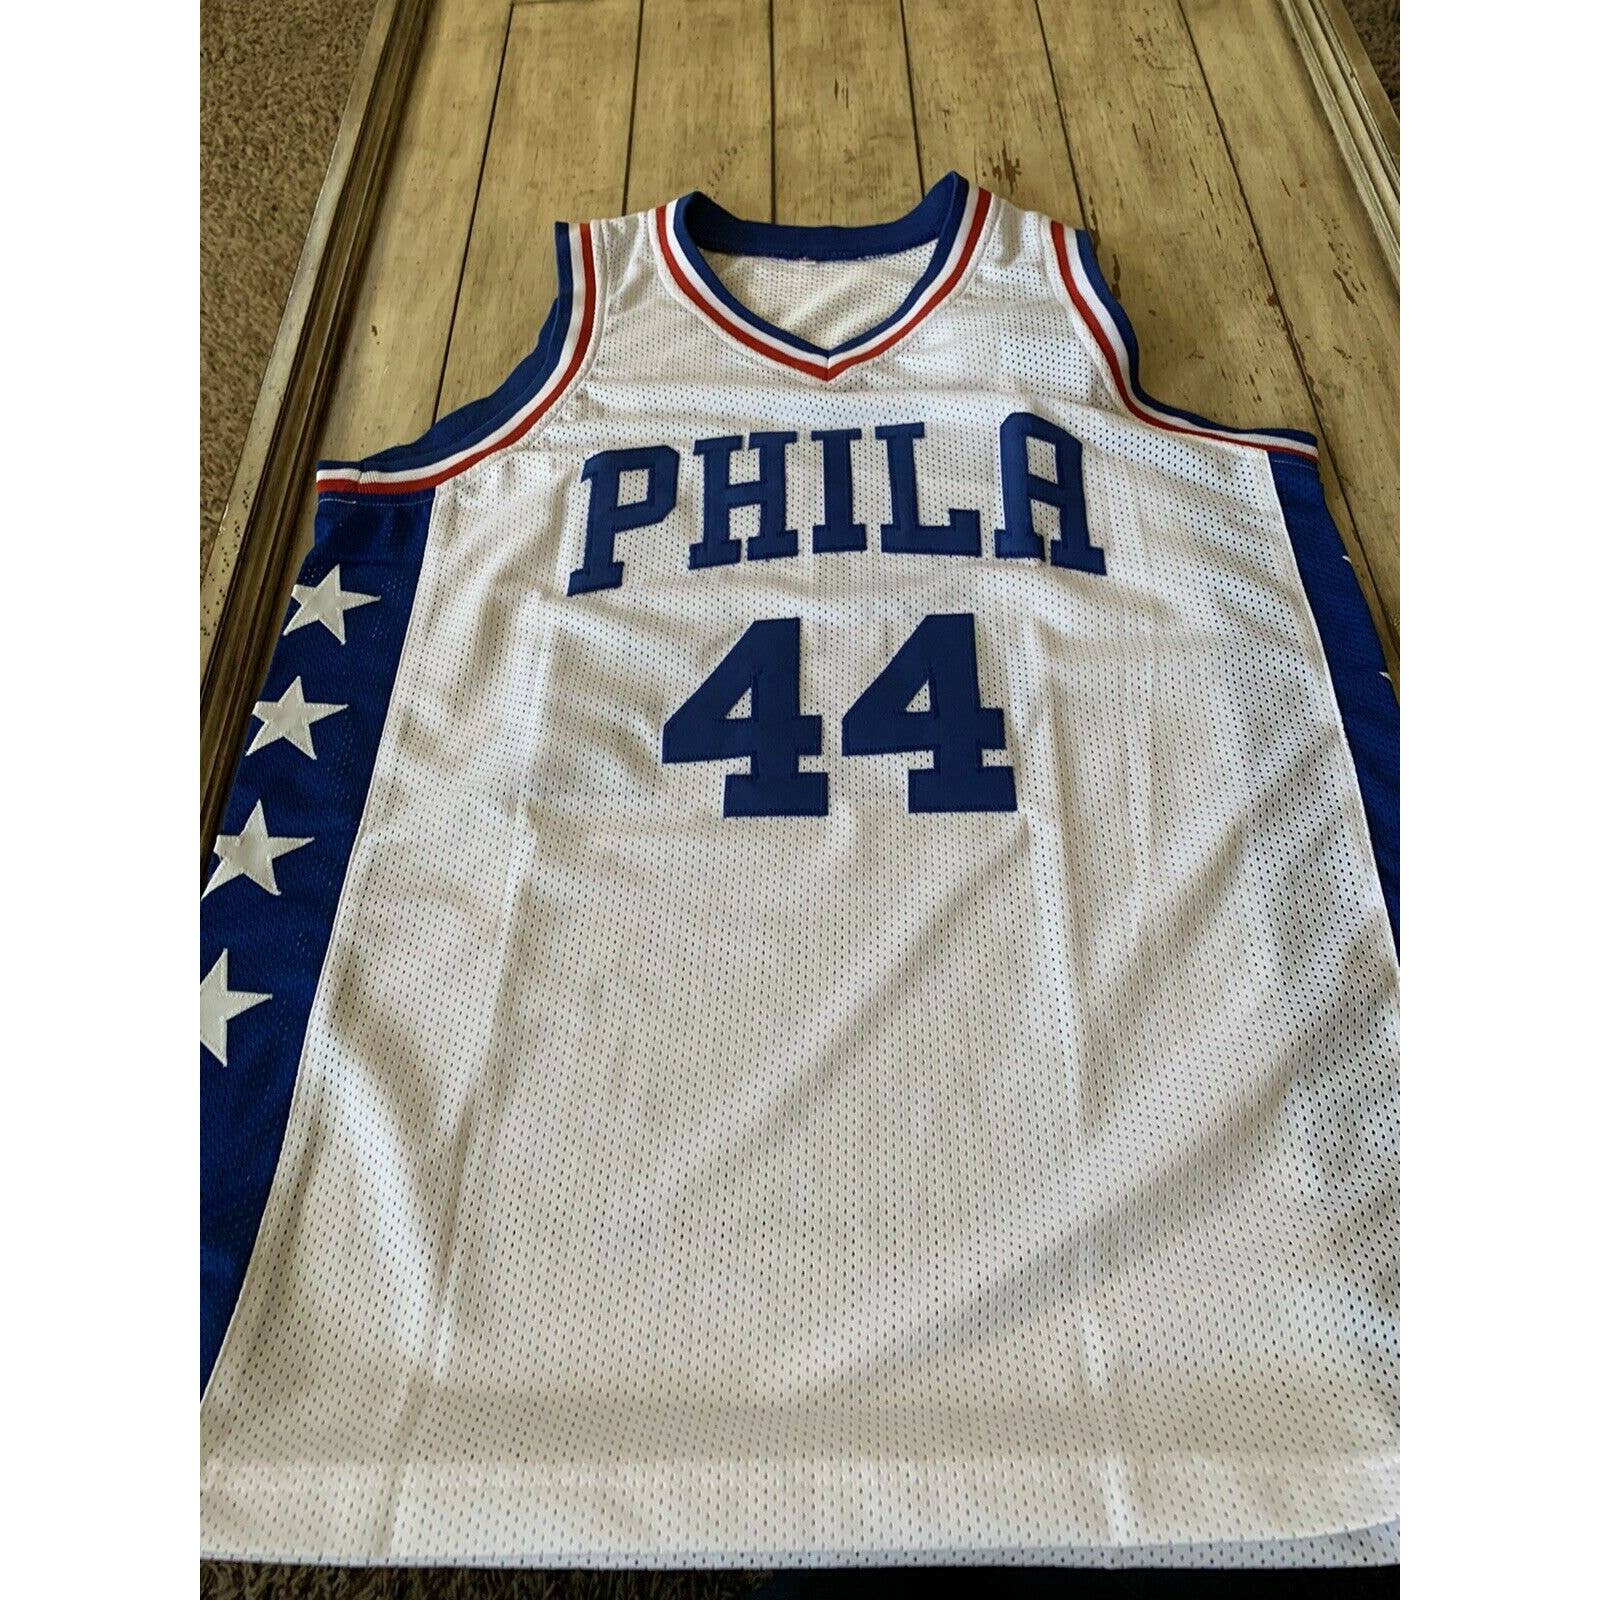 Rick Mahorn Autographed/Signed Jersey PSA/DNA Philadelphia 76ers - TreasuresEvolved